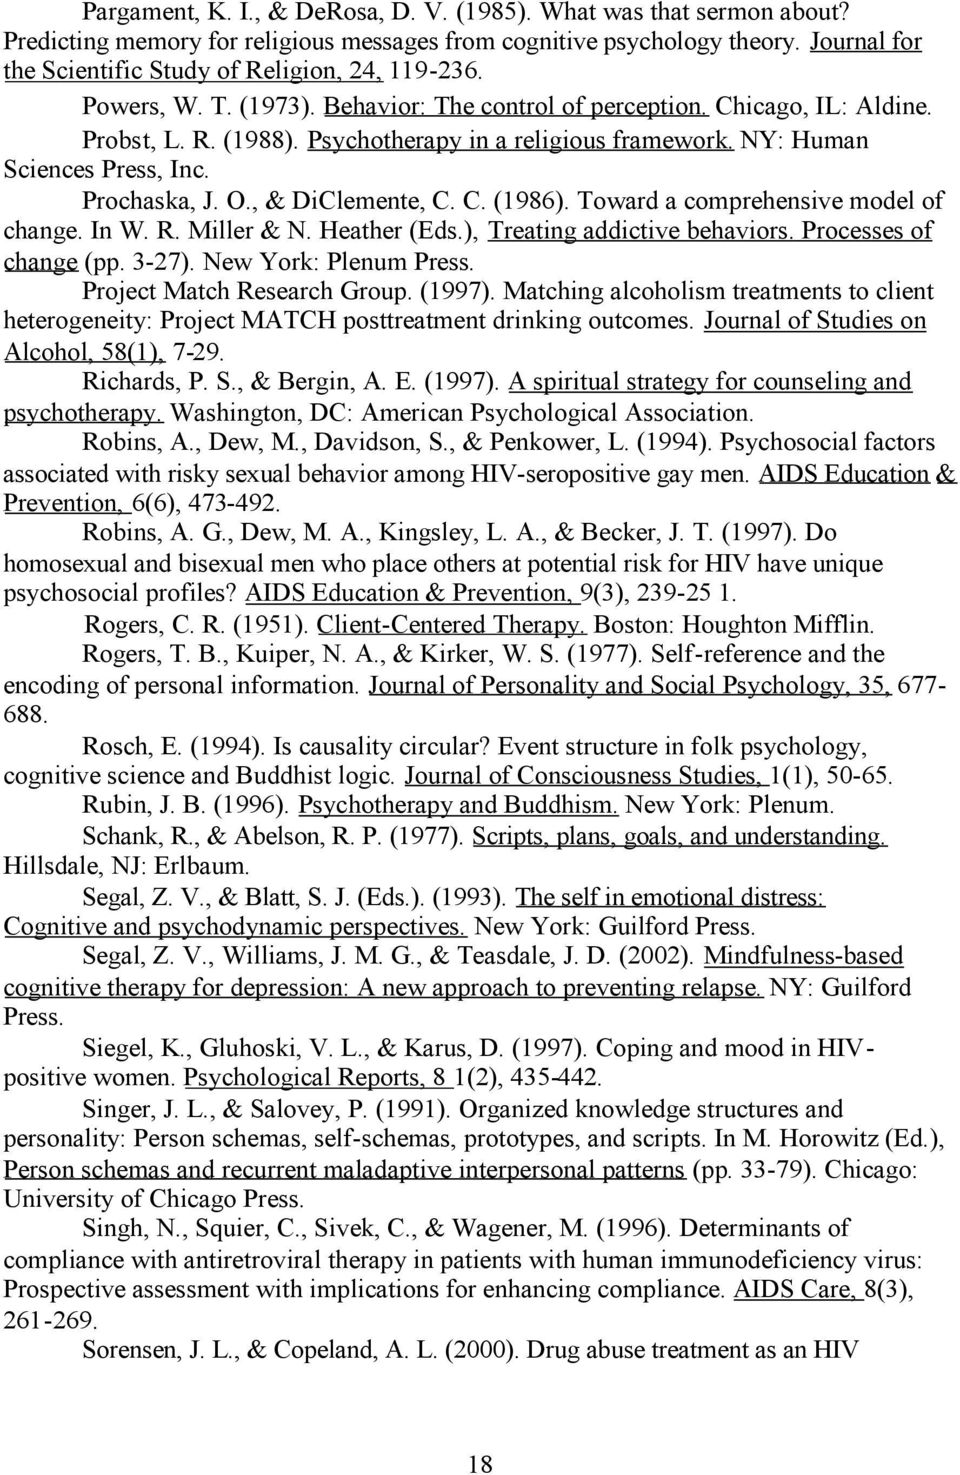 NY: Human Sciences Press, Inc. Prochaska, J. O., & DiClemente, C. C. (1986). Toward a comprehensive model of change. In W. R. Miller & N. Heather (Eds.), Treating addictive behaviors.